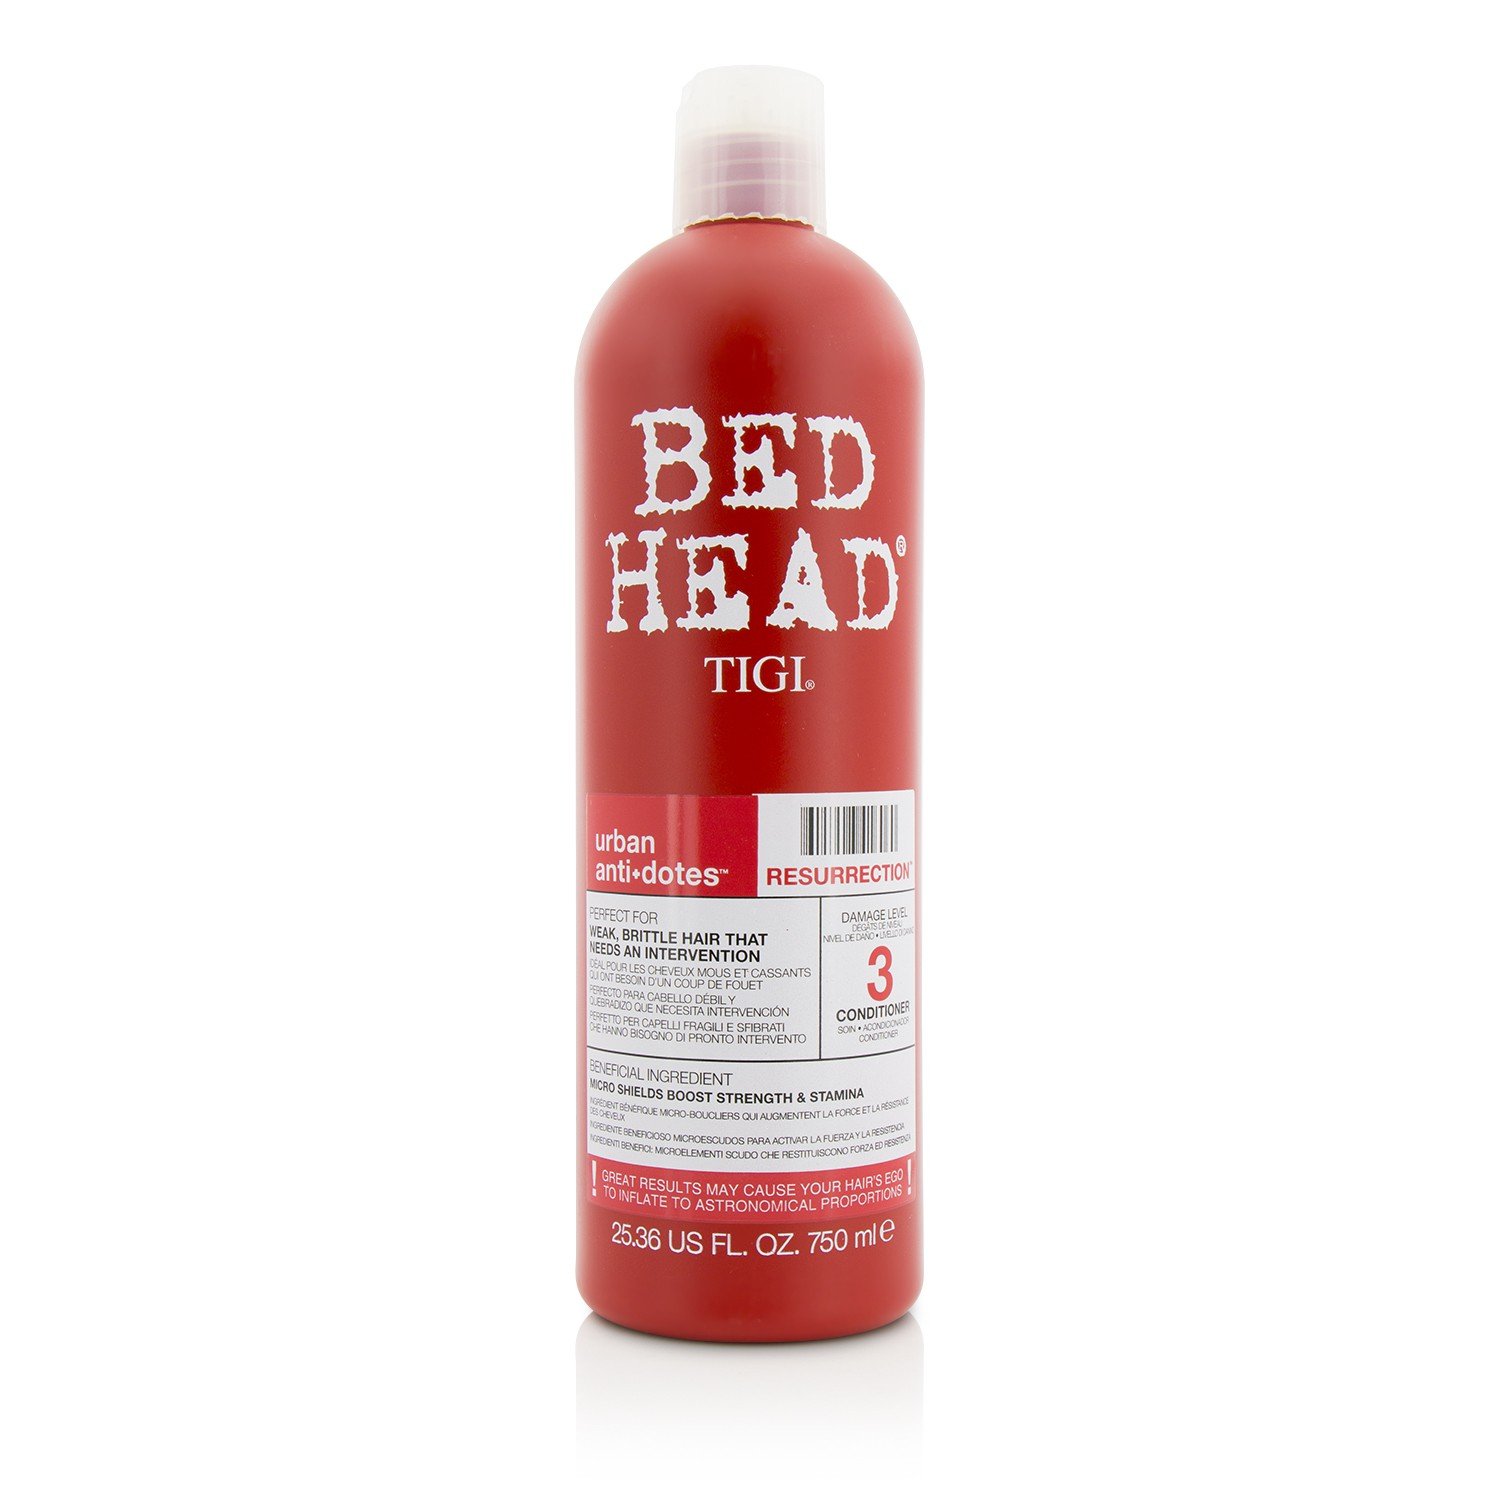 Photos - Hair Product TIGI Bed Head Urban Antidotes Resurrection Conditioner 